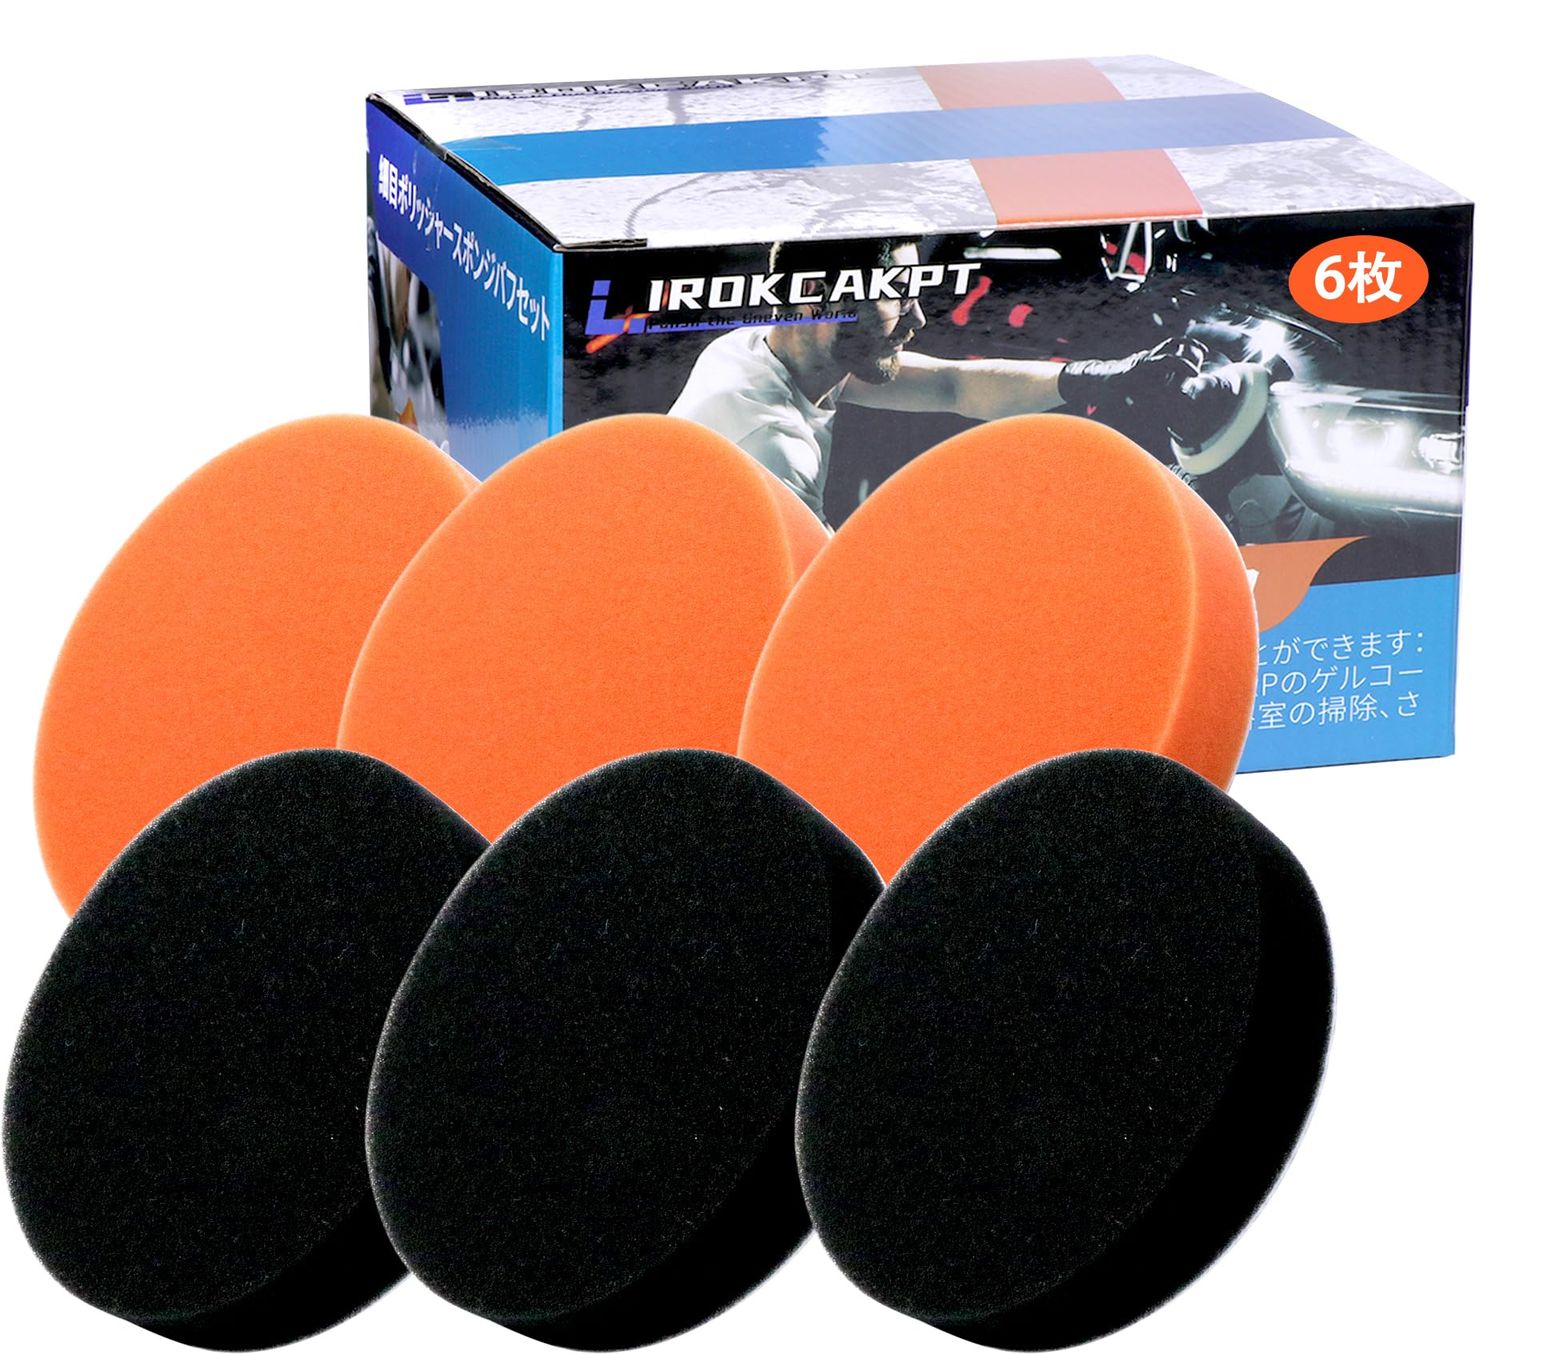 IROKCAKPT ポリッシャー バフ 125mm 6個セット,電動ポリッシャー用スポンジバフ,超細粒子の柔らかウレタンスポンジバフです マジックテープ 曲面研磨アダプター(3個オレンジ + 3個ブラック)